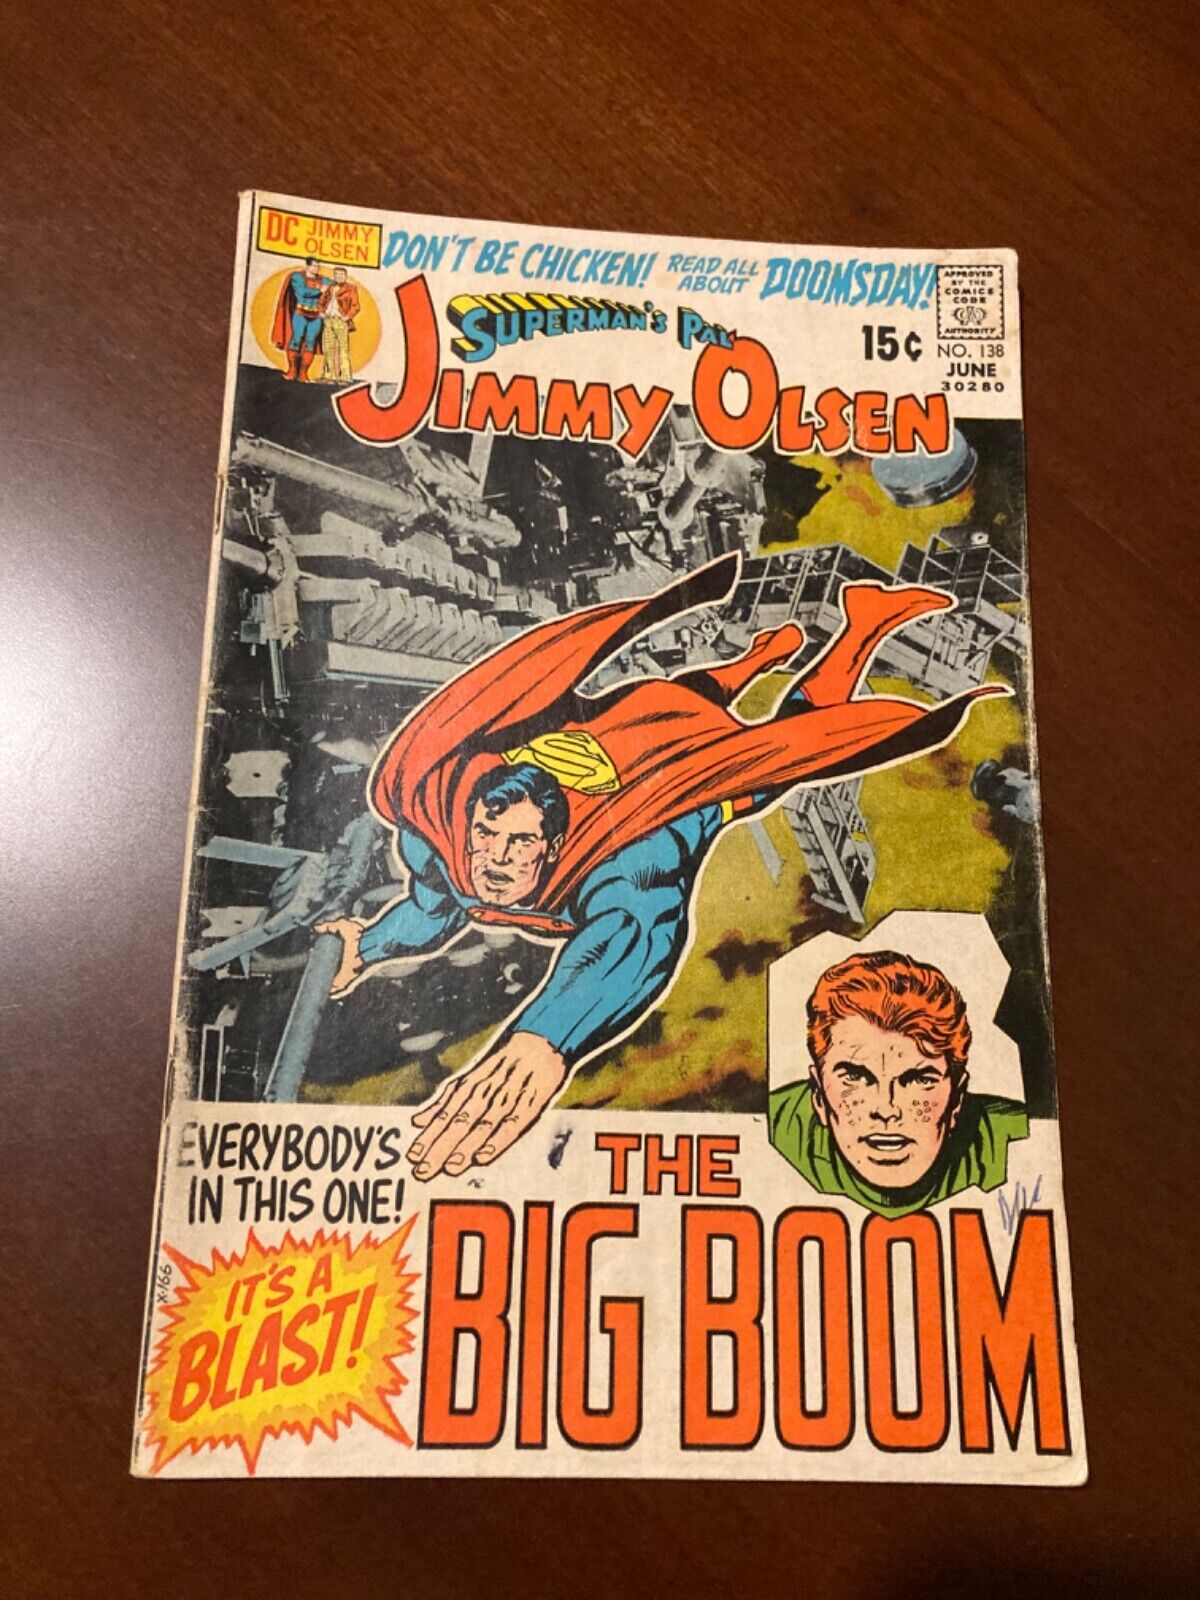 Superman\'s Pal---Jimmy Olsen (DC) #138, June 1971, $0.15, VG+ (4.5) Comic Book